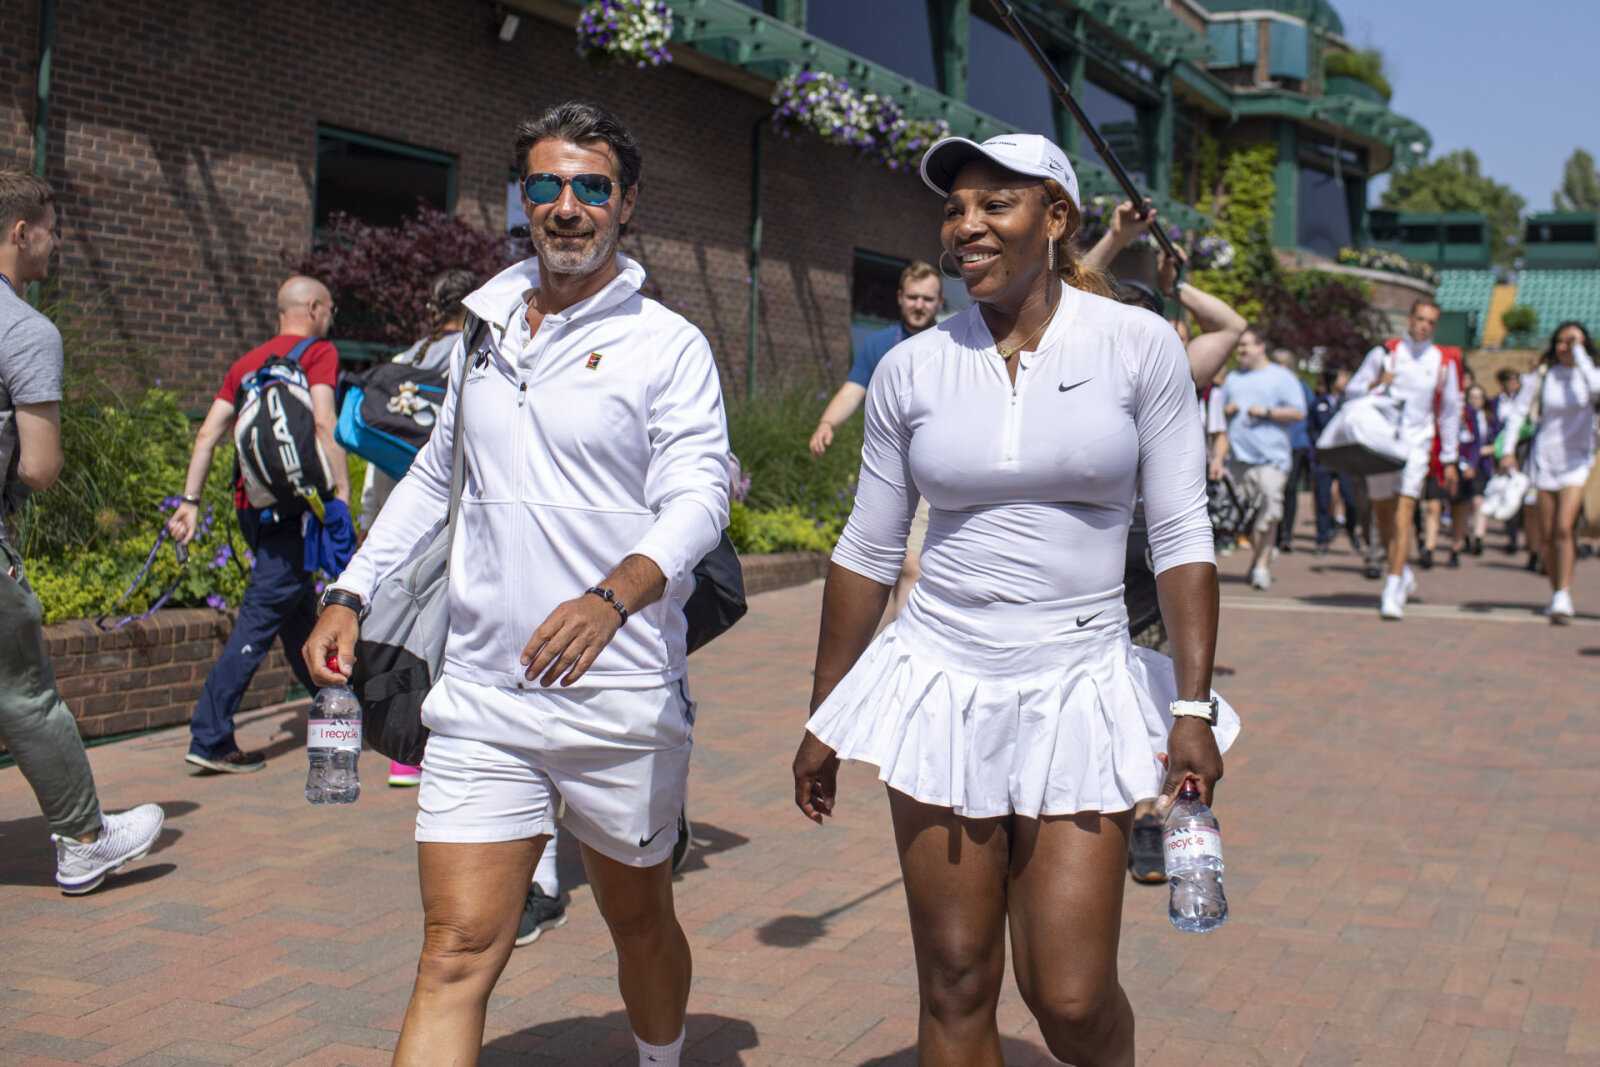 « Même Smashing Your Racquet » : Patrick Mouratoglou Trolls Serena Williams